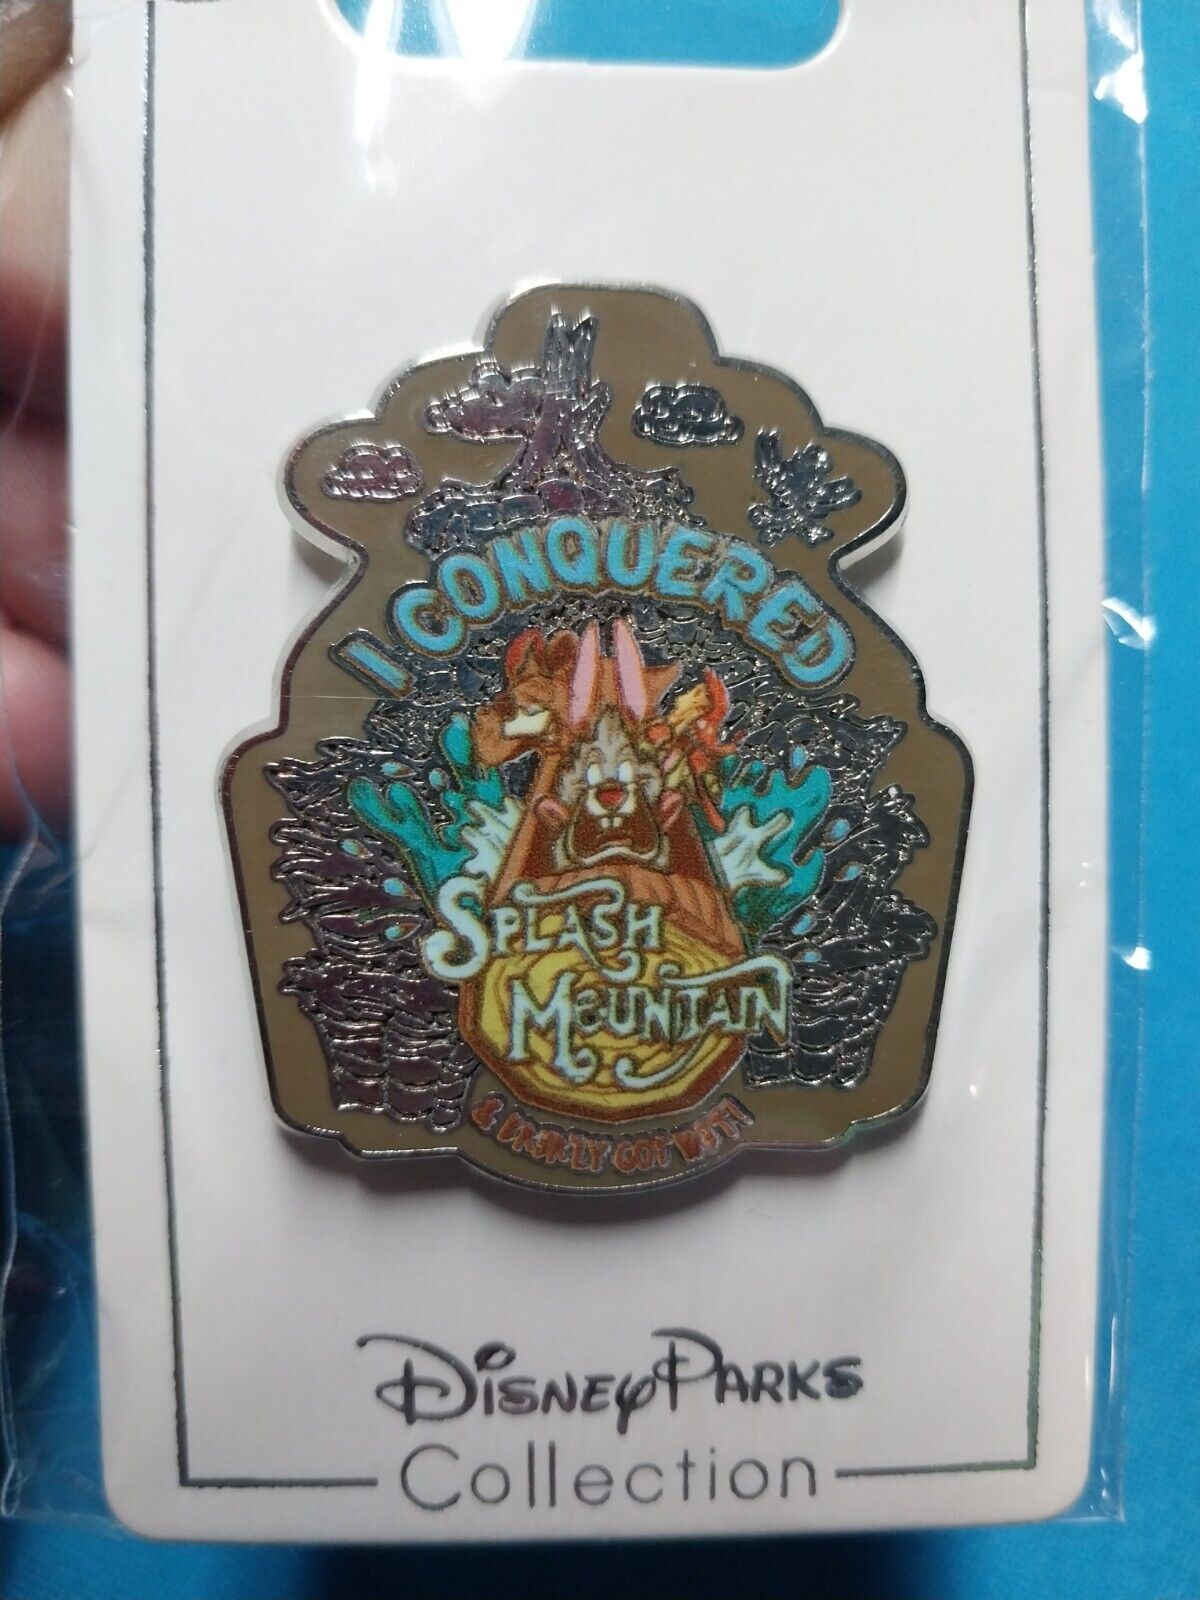 Splash Mountain Disney Parks Trading Pin “I conquered Splash Mountain”